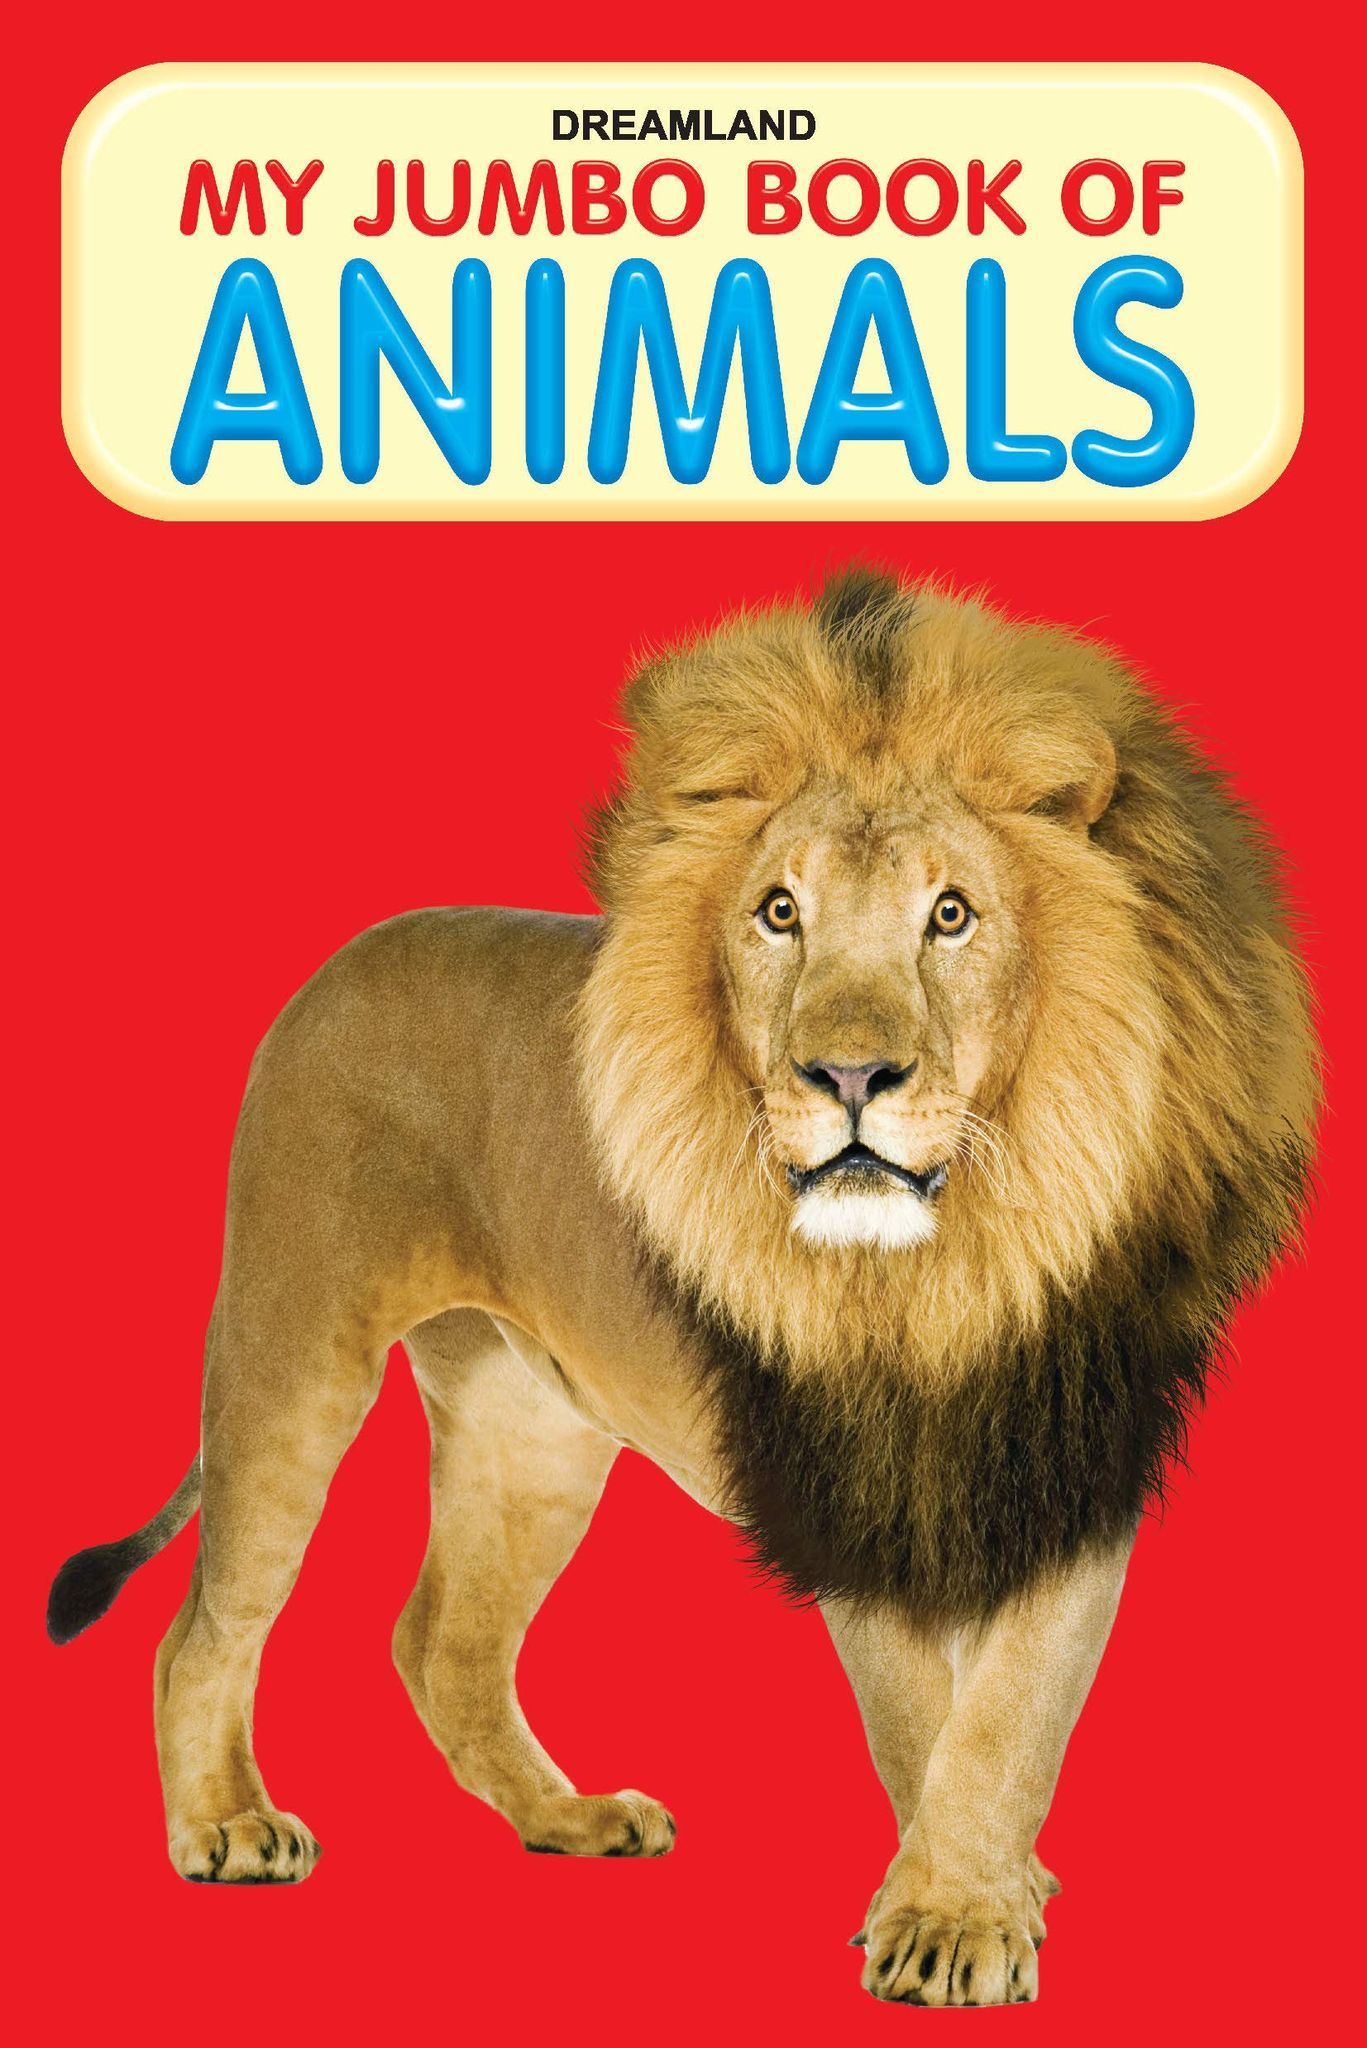 Animal (English, Hardcover, unknown) (My Jumbo Books) [Hardcover] Dreamland Publications